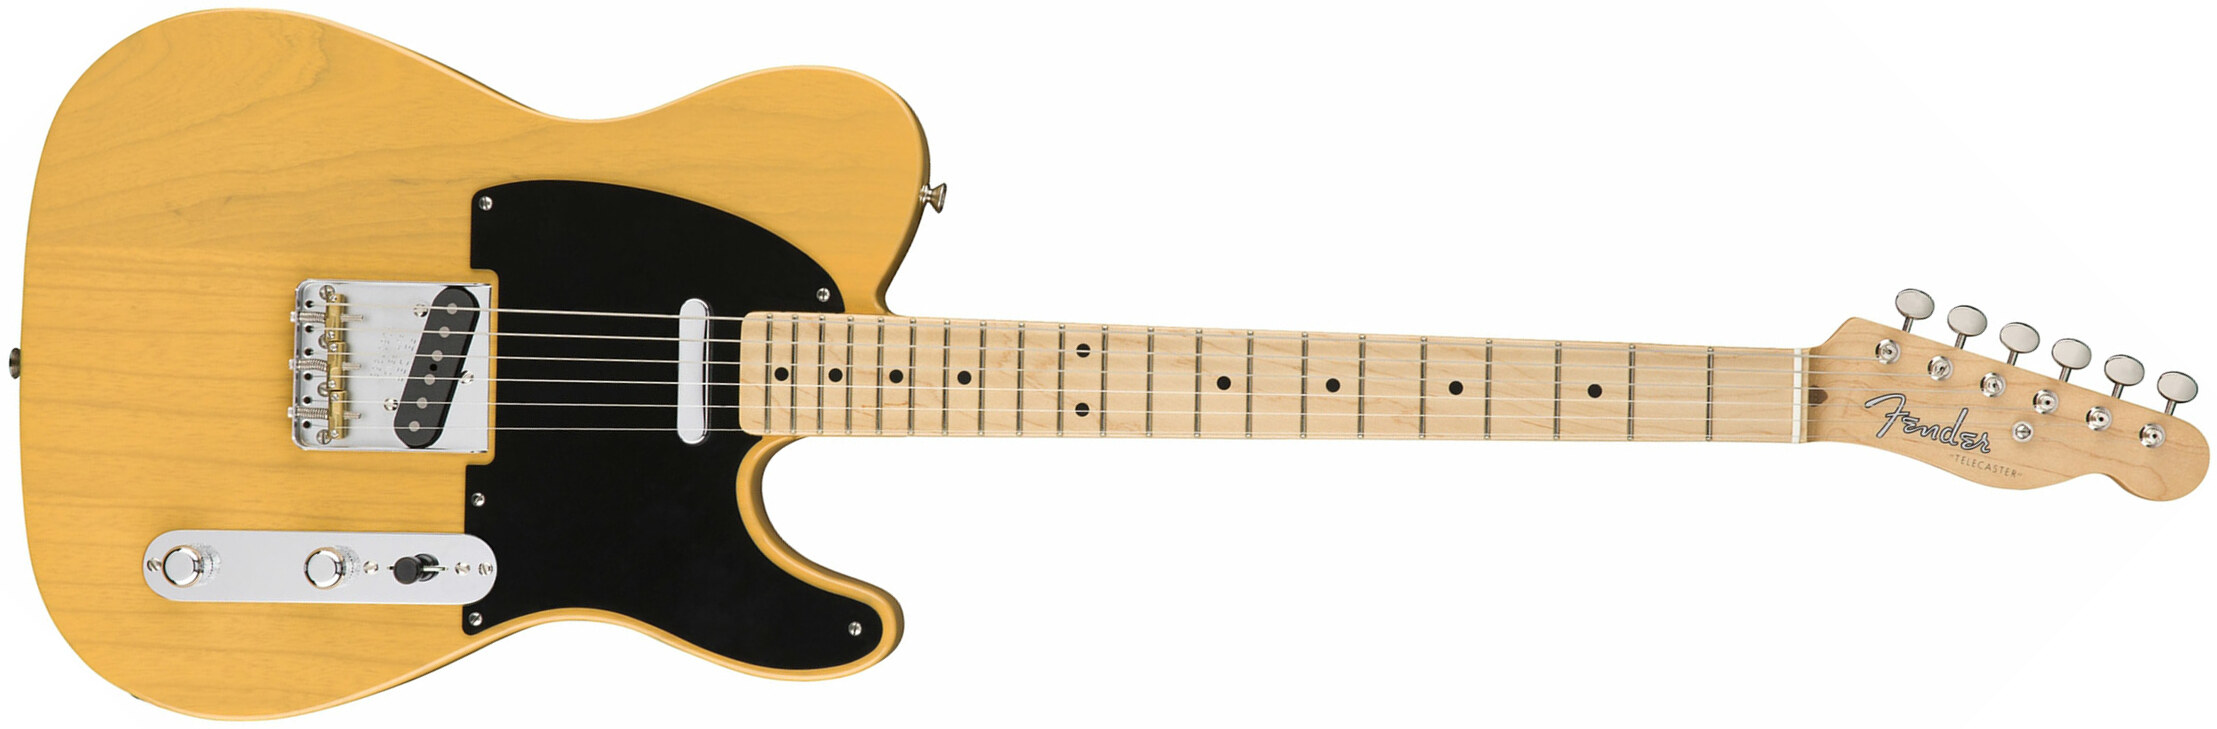 Fender Tele '50s American Original Usa Mn - Butterscotch Blonde - Televorm elektrische gitaar - Main picture